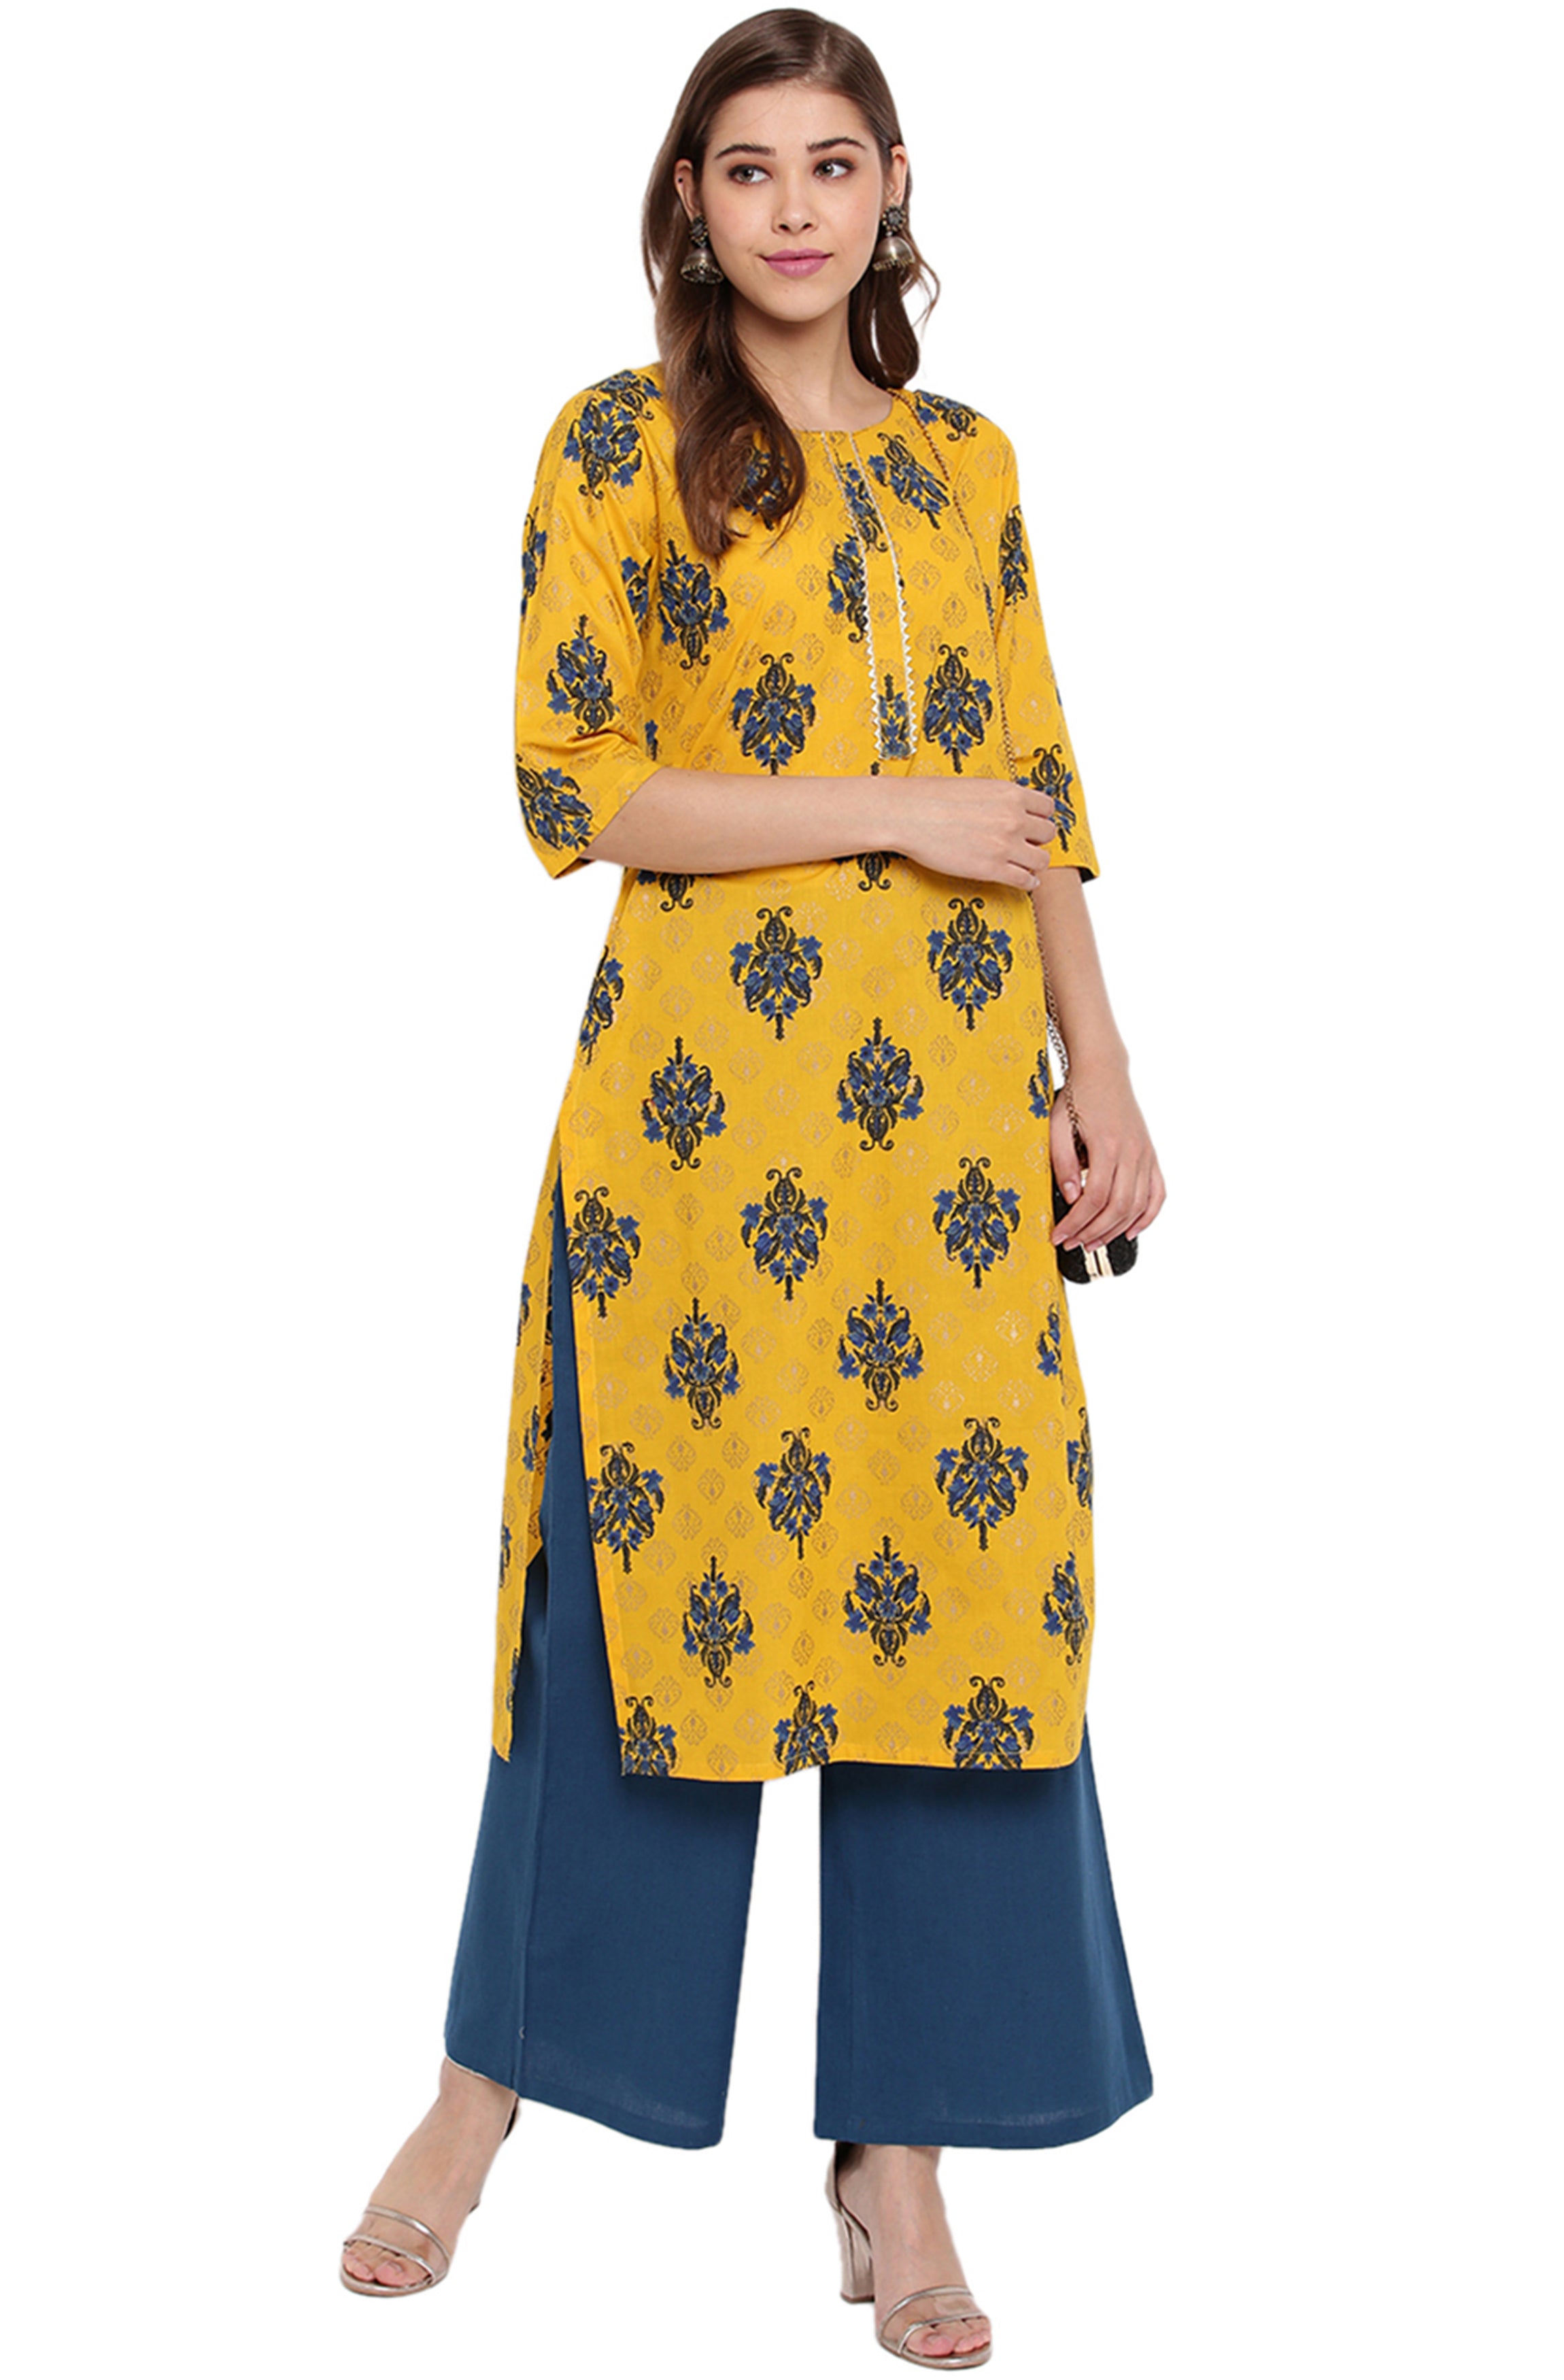 Buy Set Of 2:Sangmu Indigo Blue Quilted Short Kurti & Checkered Palazzo  Pants by Designer TJORI for Women online at Kaarimarket.com